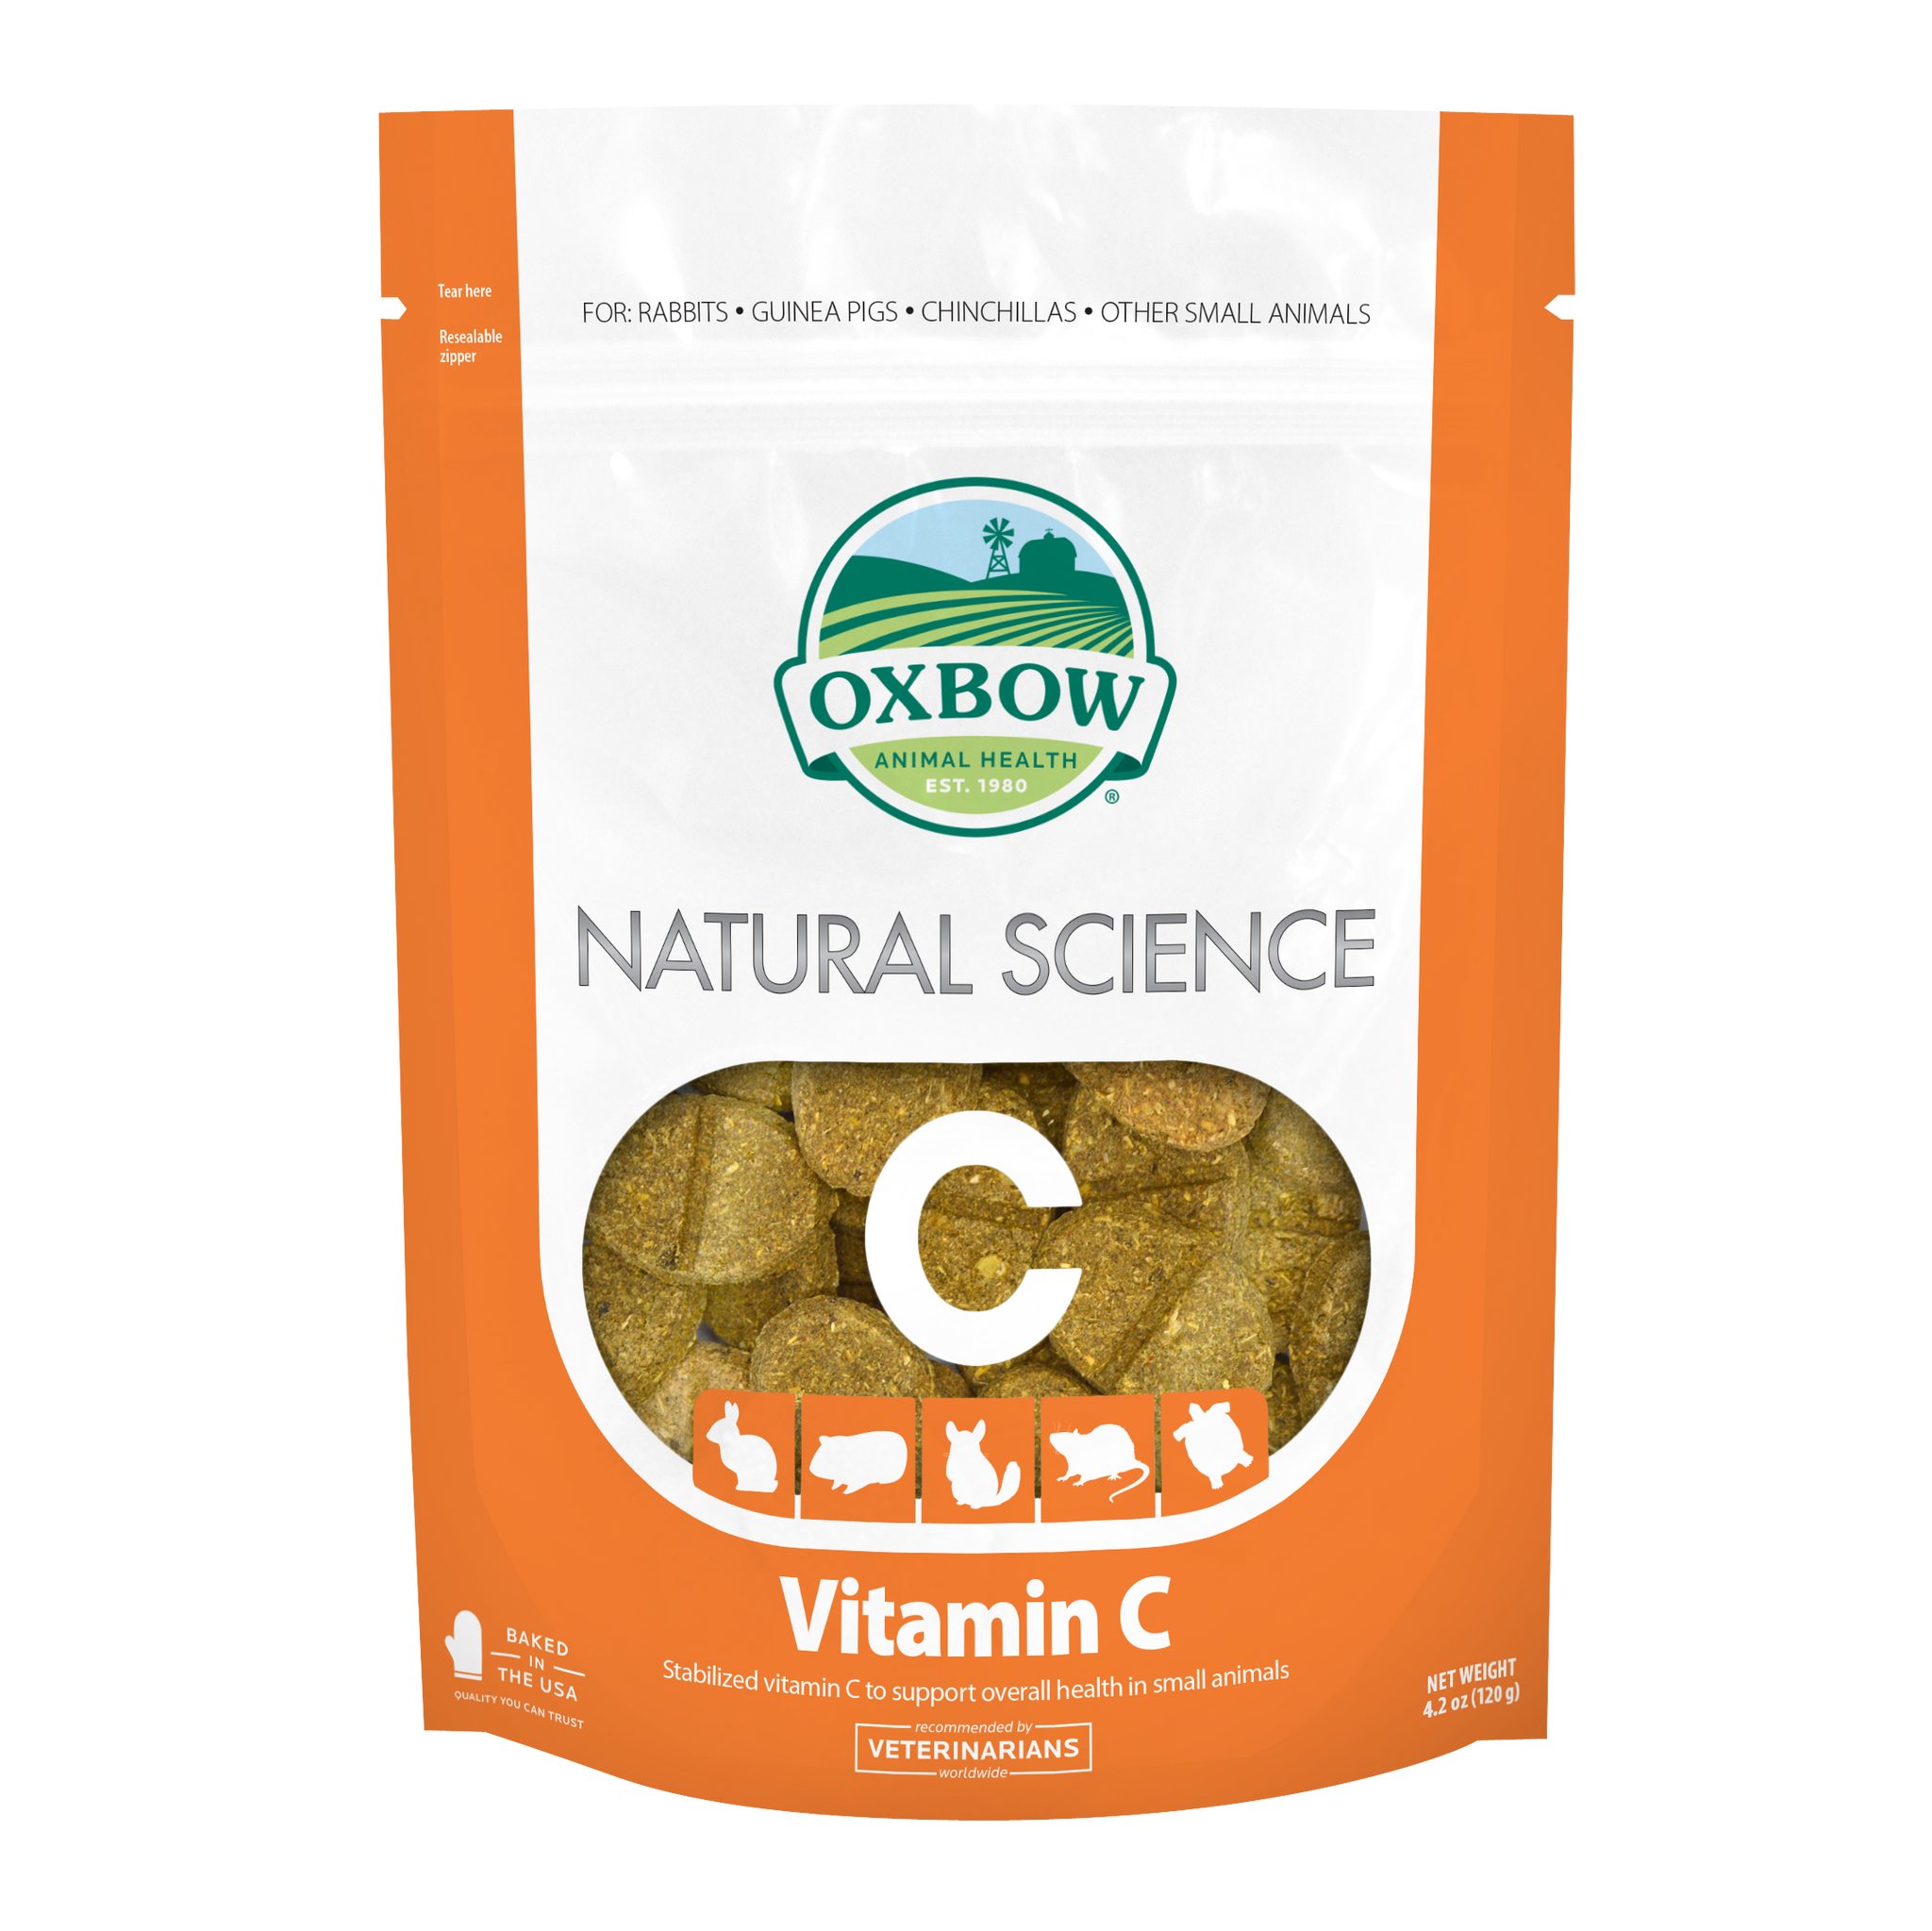 Natural Science - Vitamin C 120g